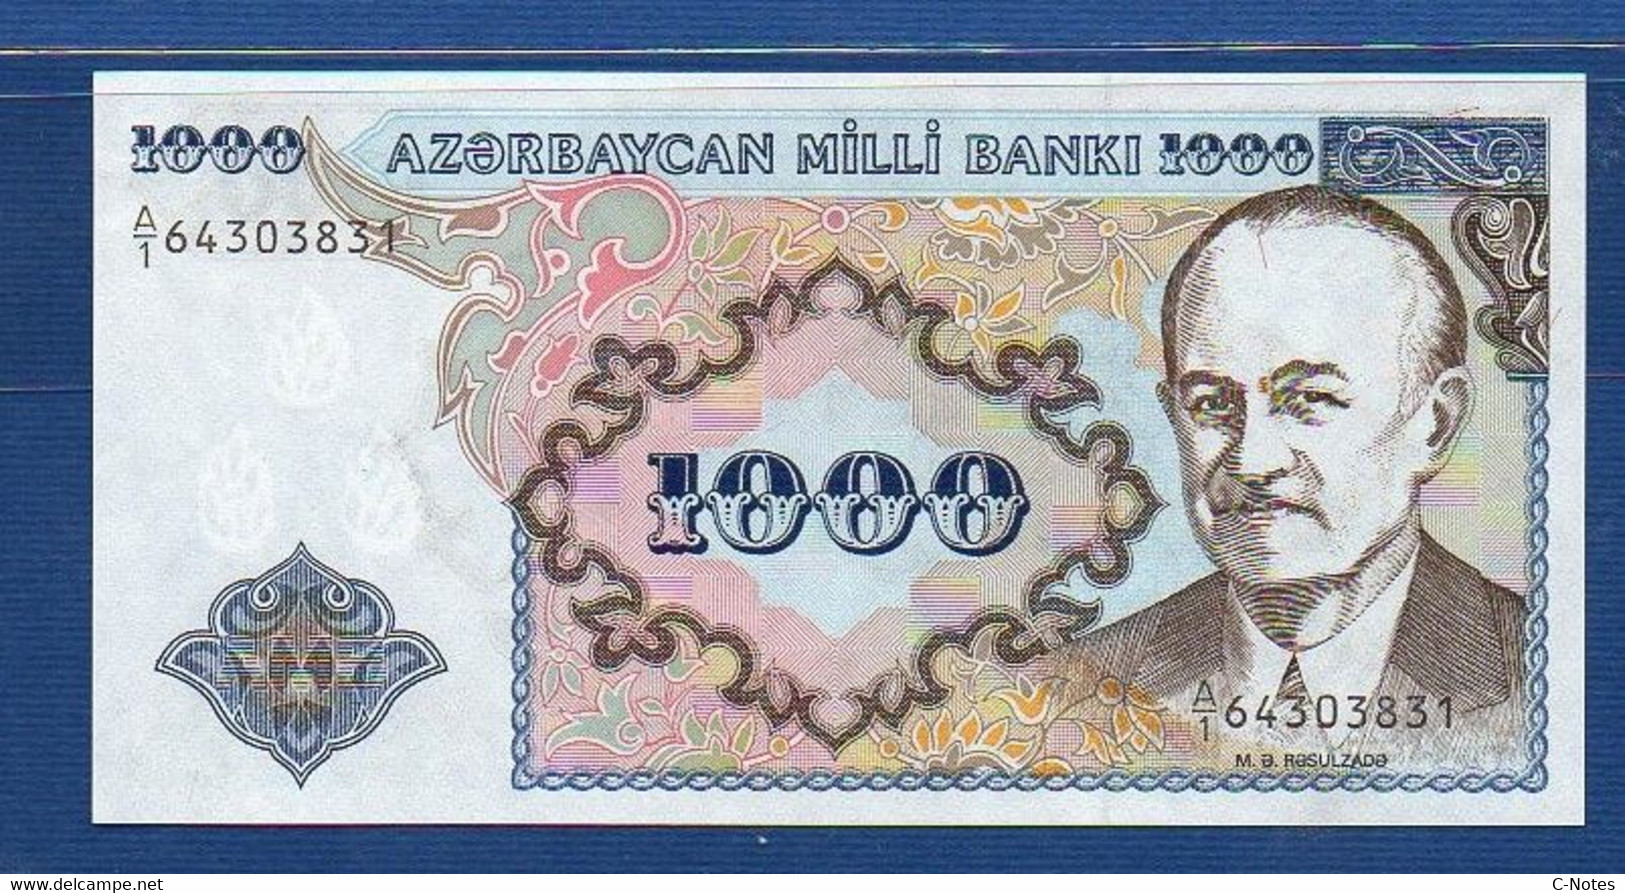 AZERBAIJAN - P.20a - 1000 1.000 MANAT ND (1993) UNC, Serie A/1 64303831 - Aserbaidschan